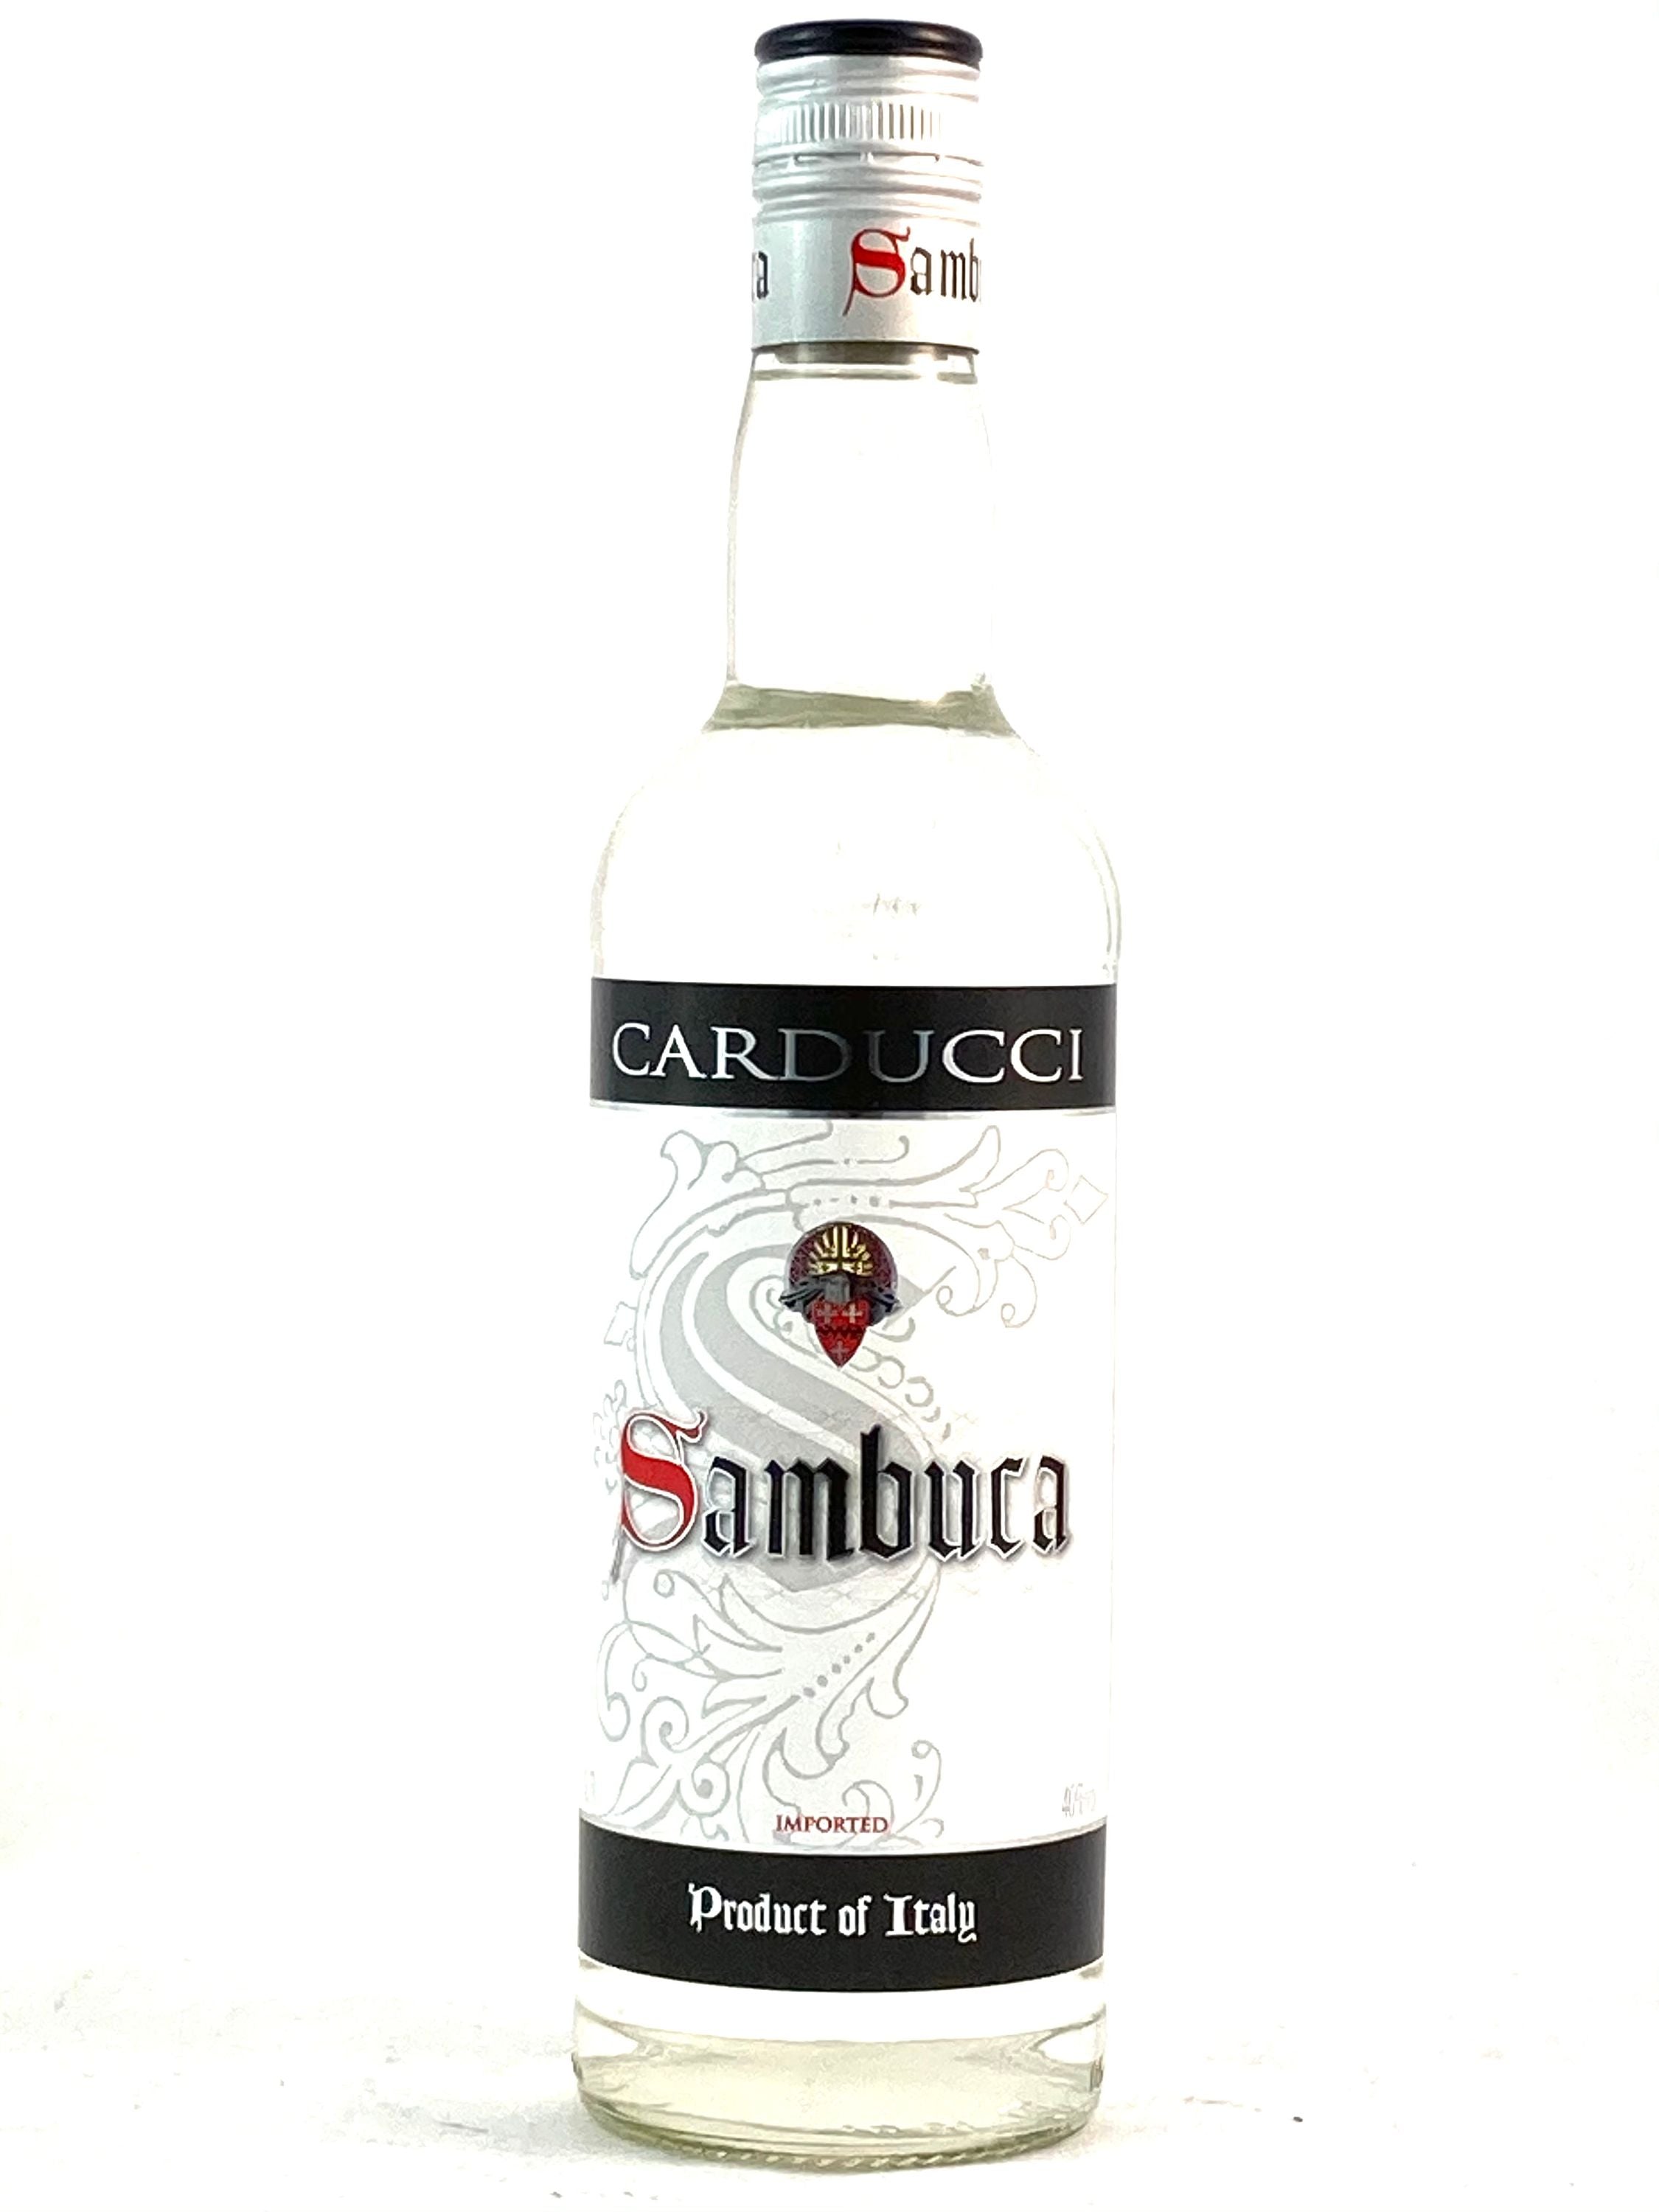 Carducci Sambuca 0.7l, alc. 40% by volume, Sambuca Italy